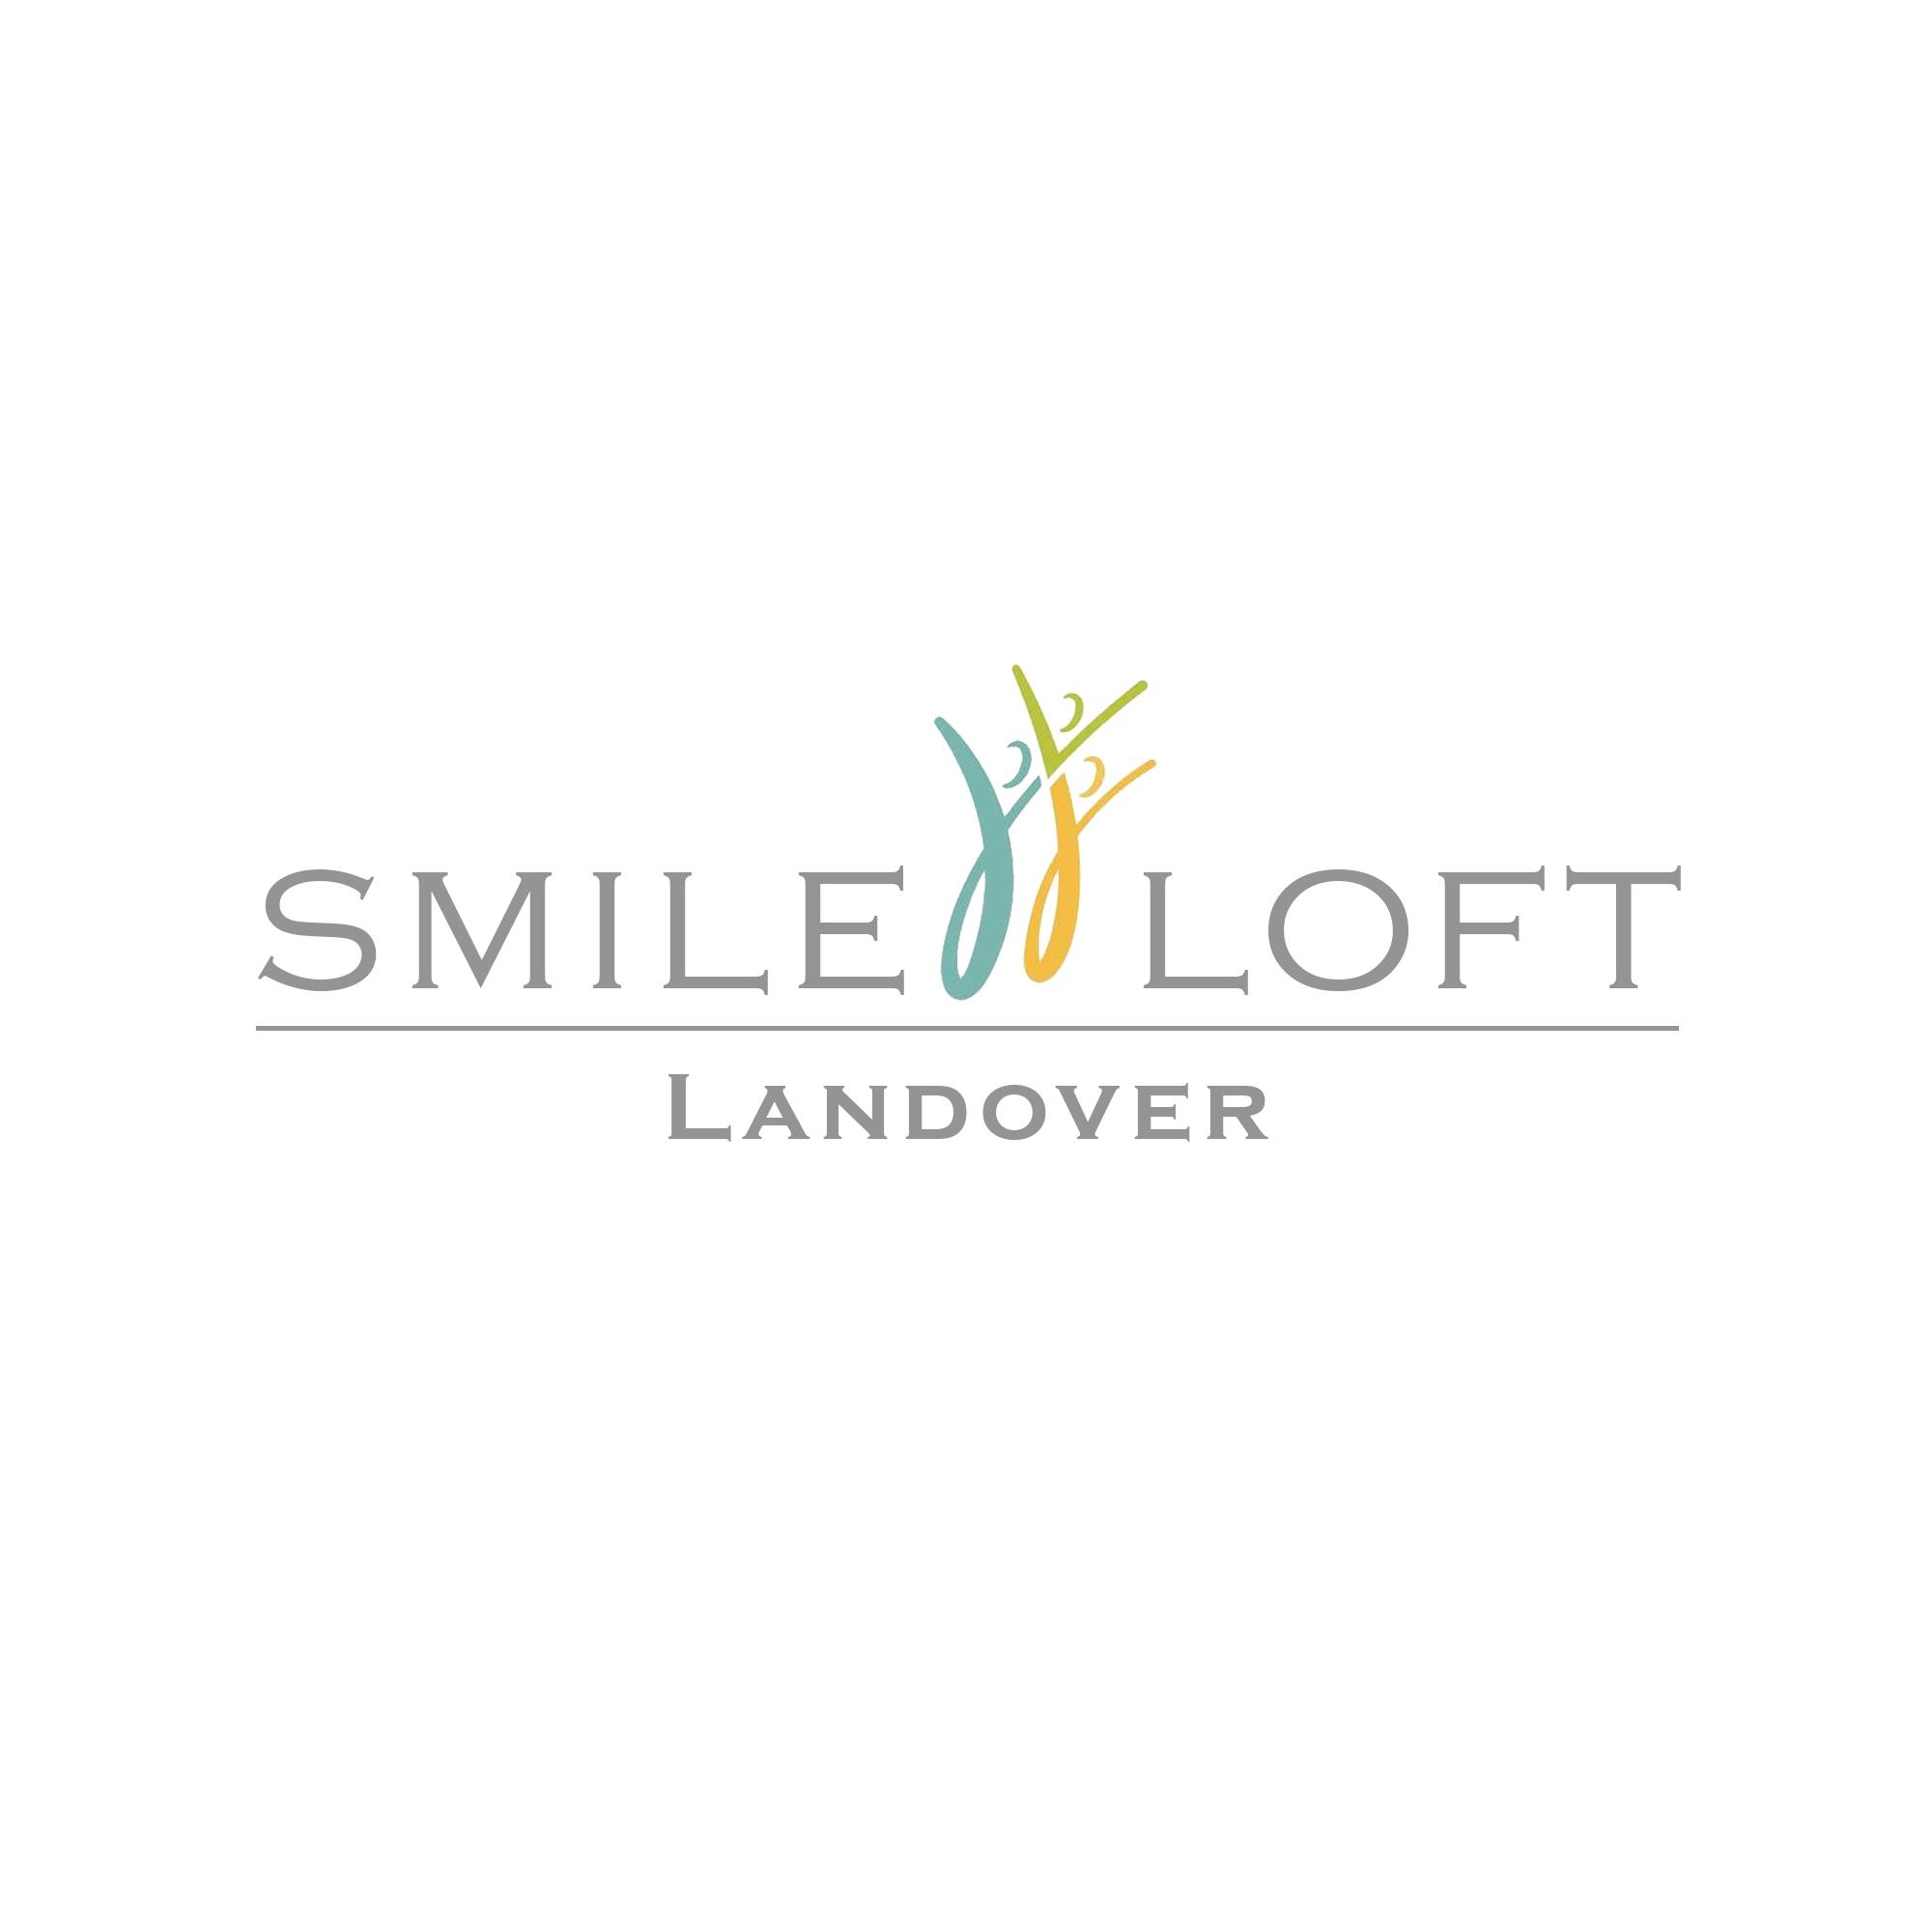 Smile-Loft-Landover-logo.jpg